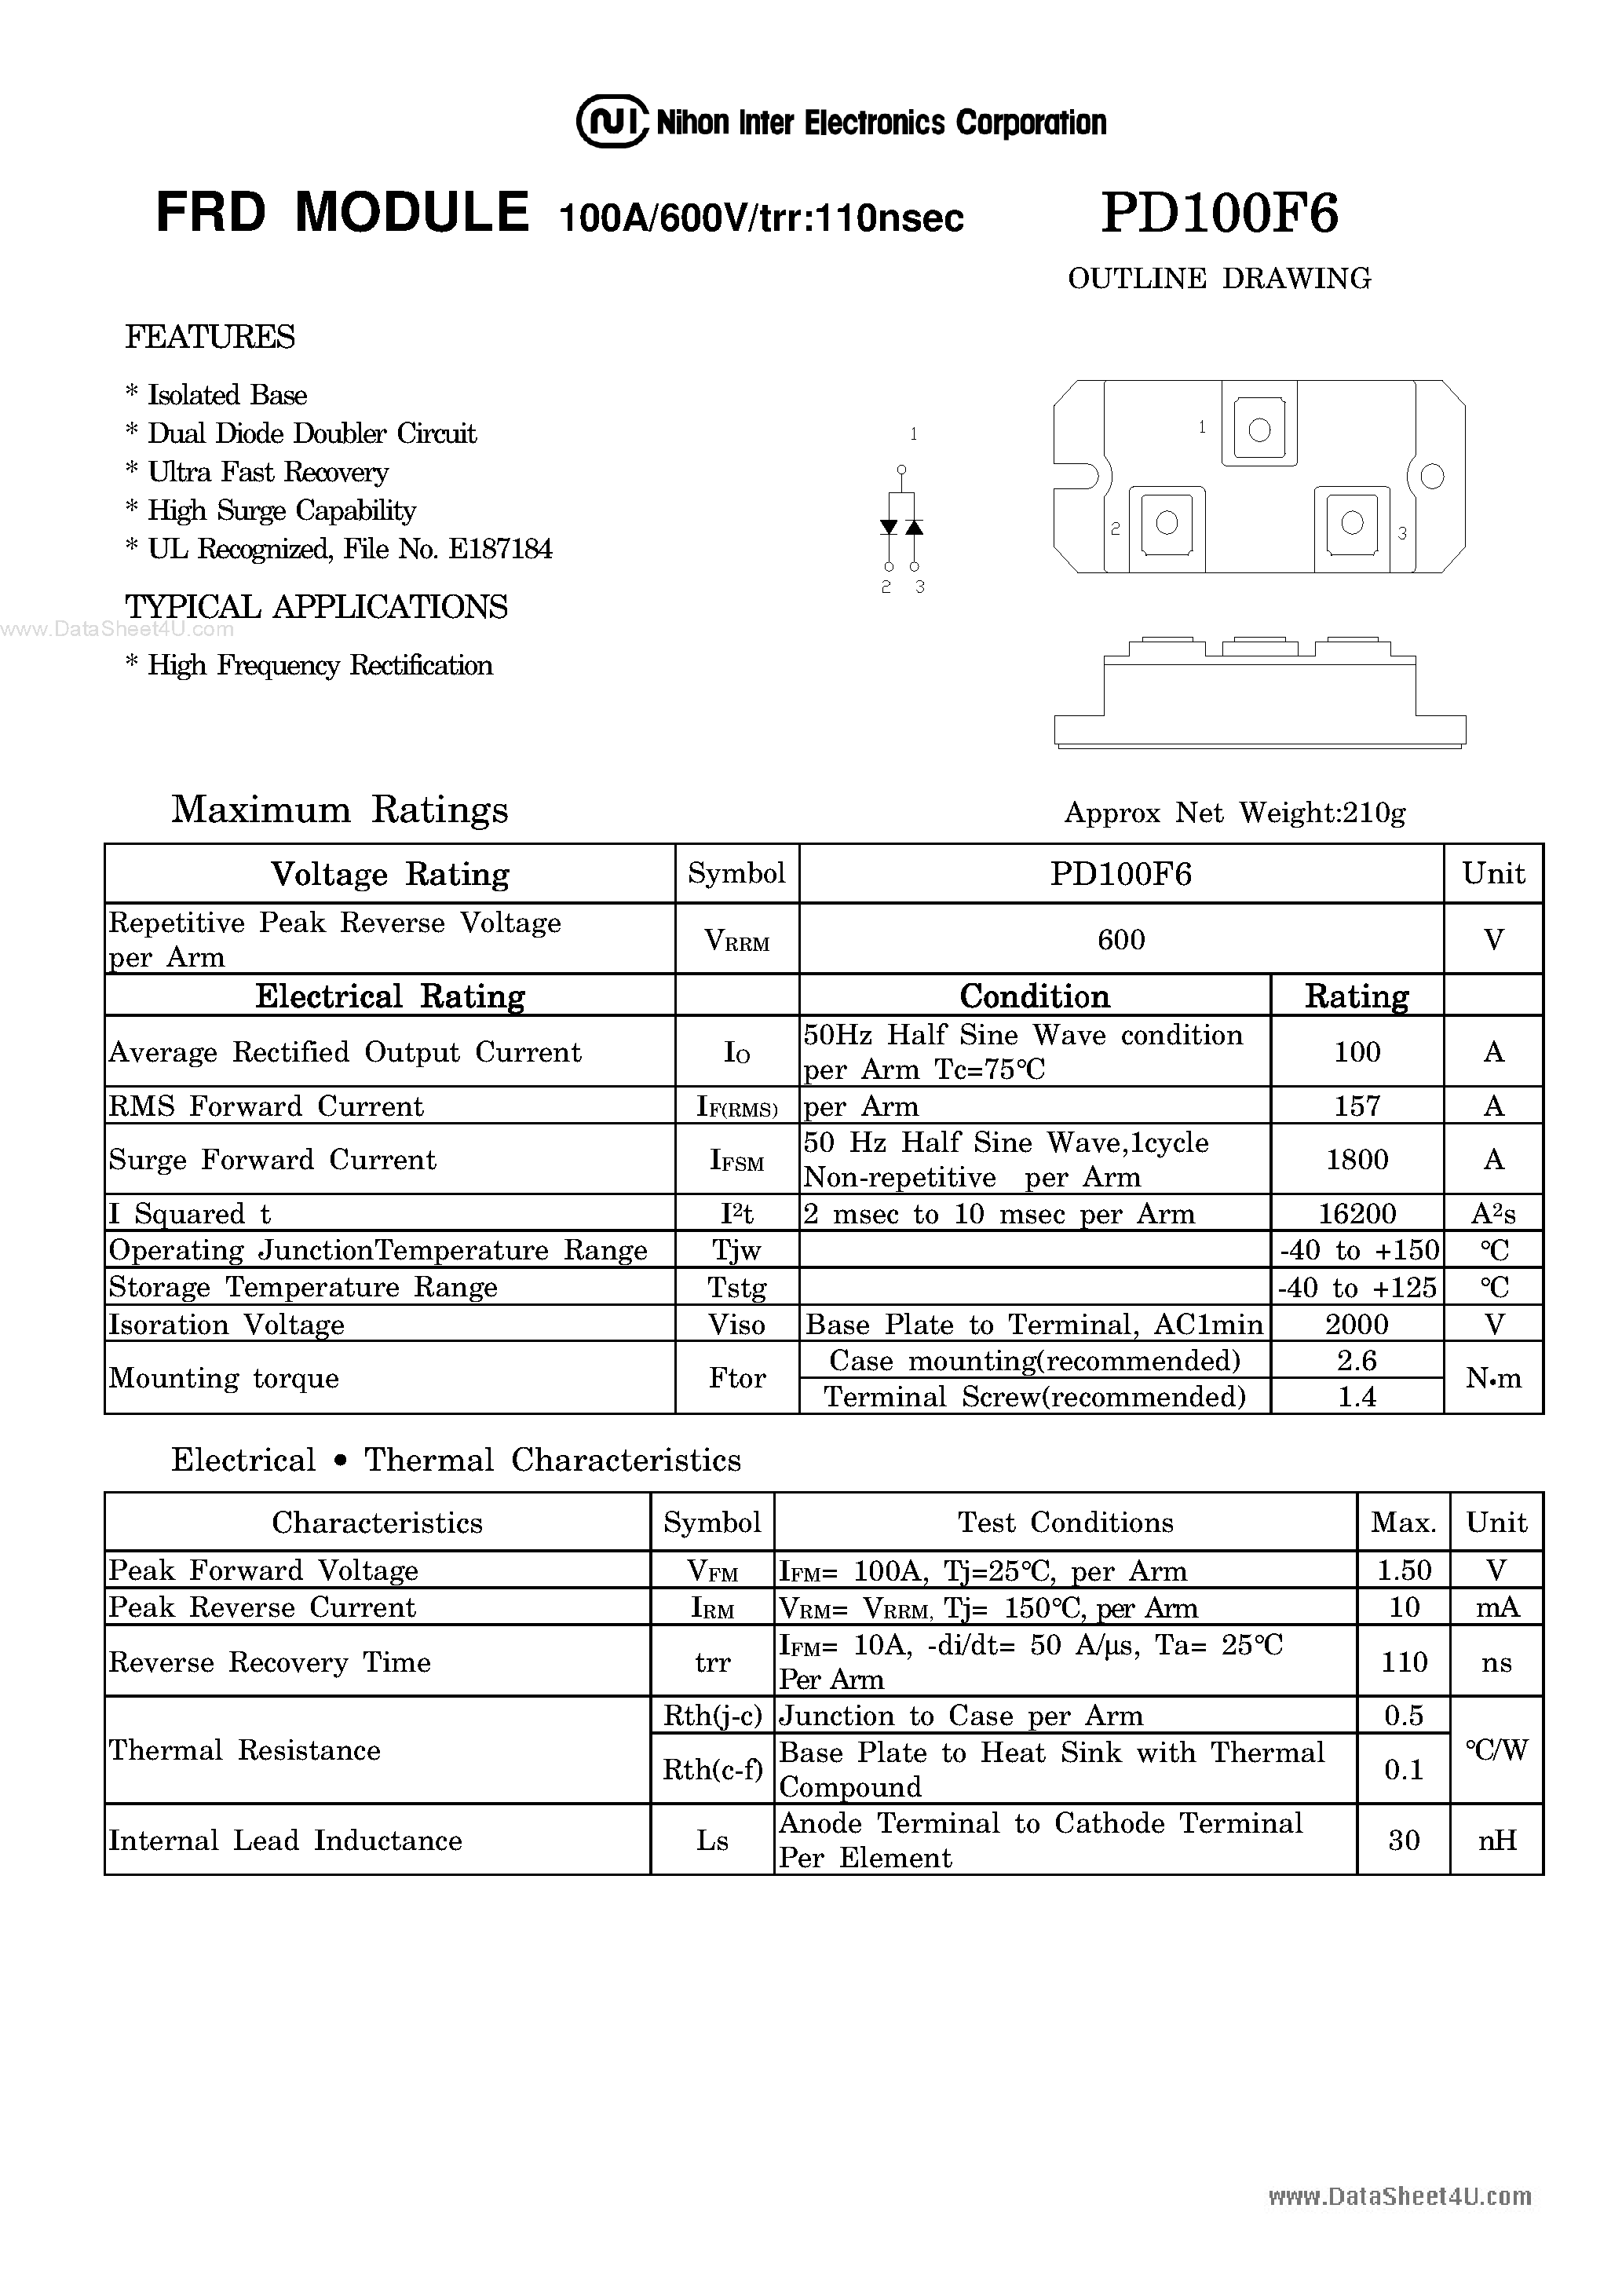 Datasheet PD100F6 - FRD MODULE page 1